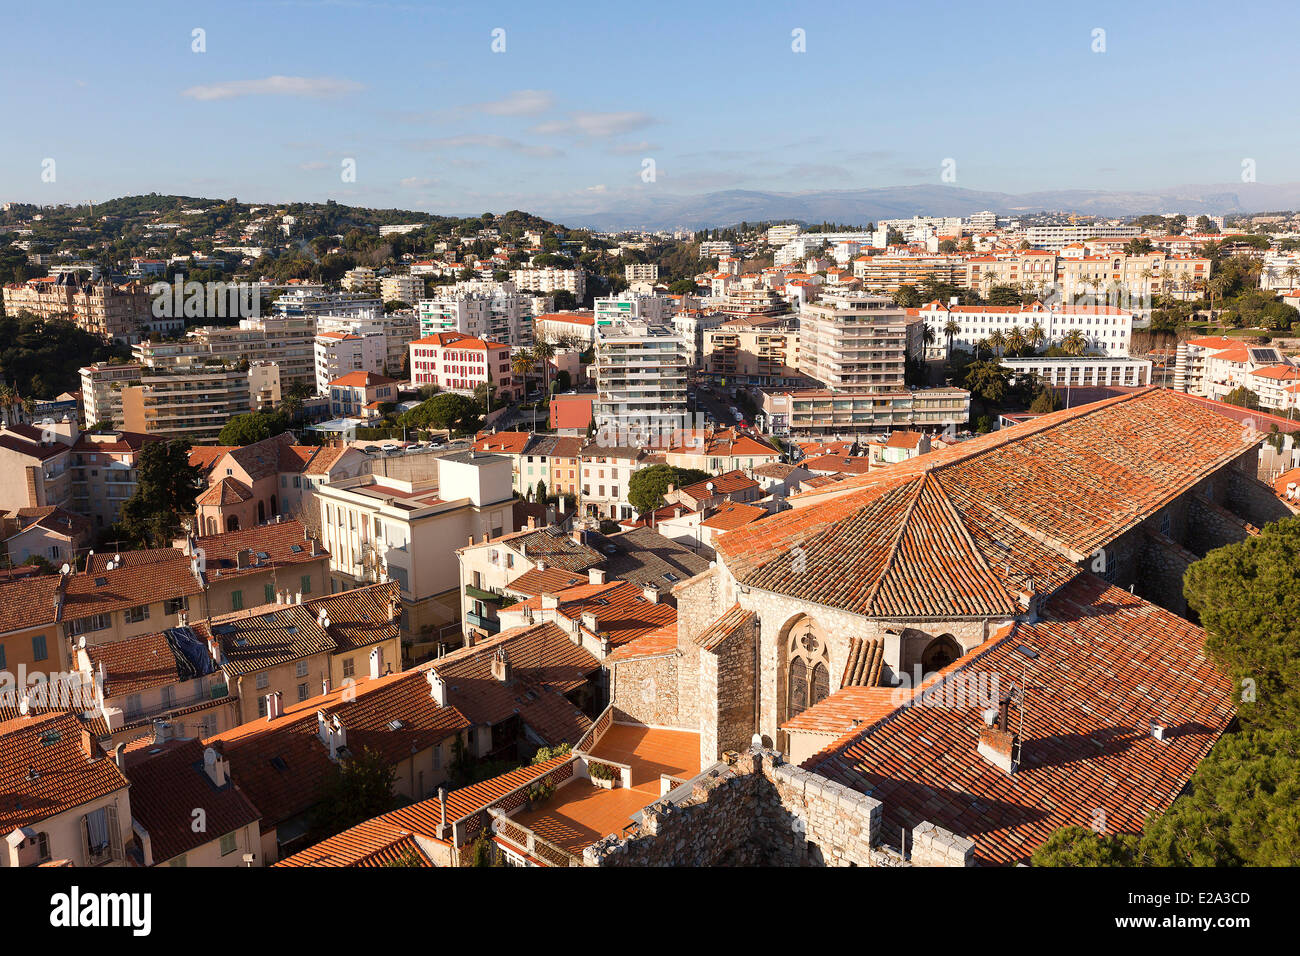 France, Alpes Maritimes, Cannes, view on Le Suquet district Stock Photo